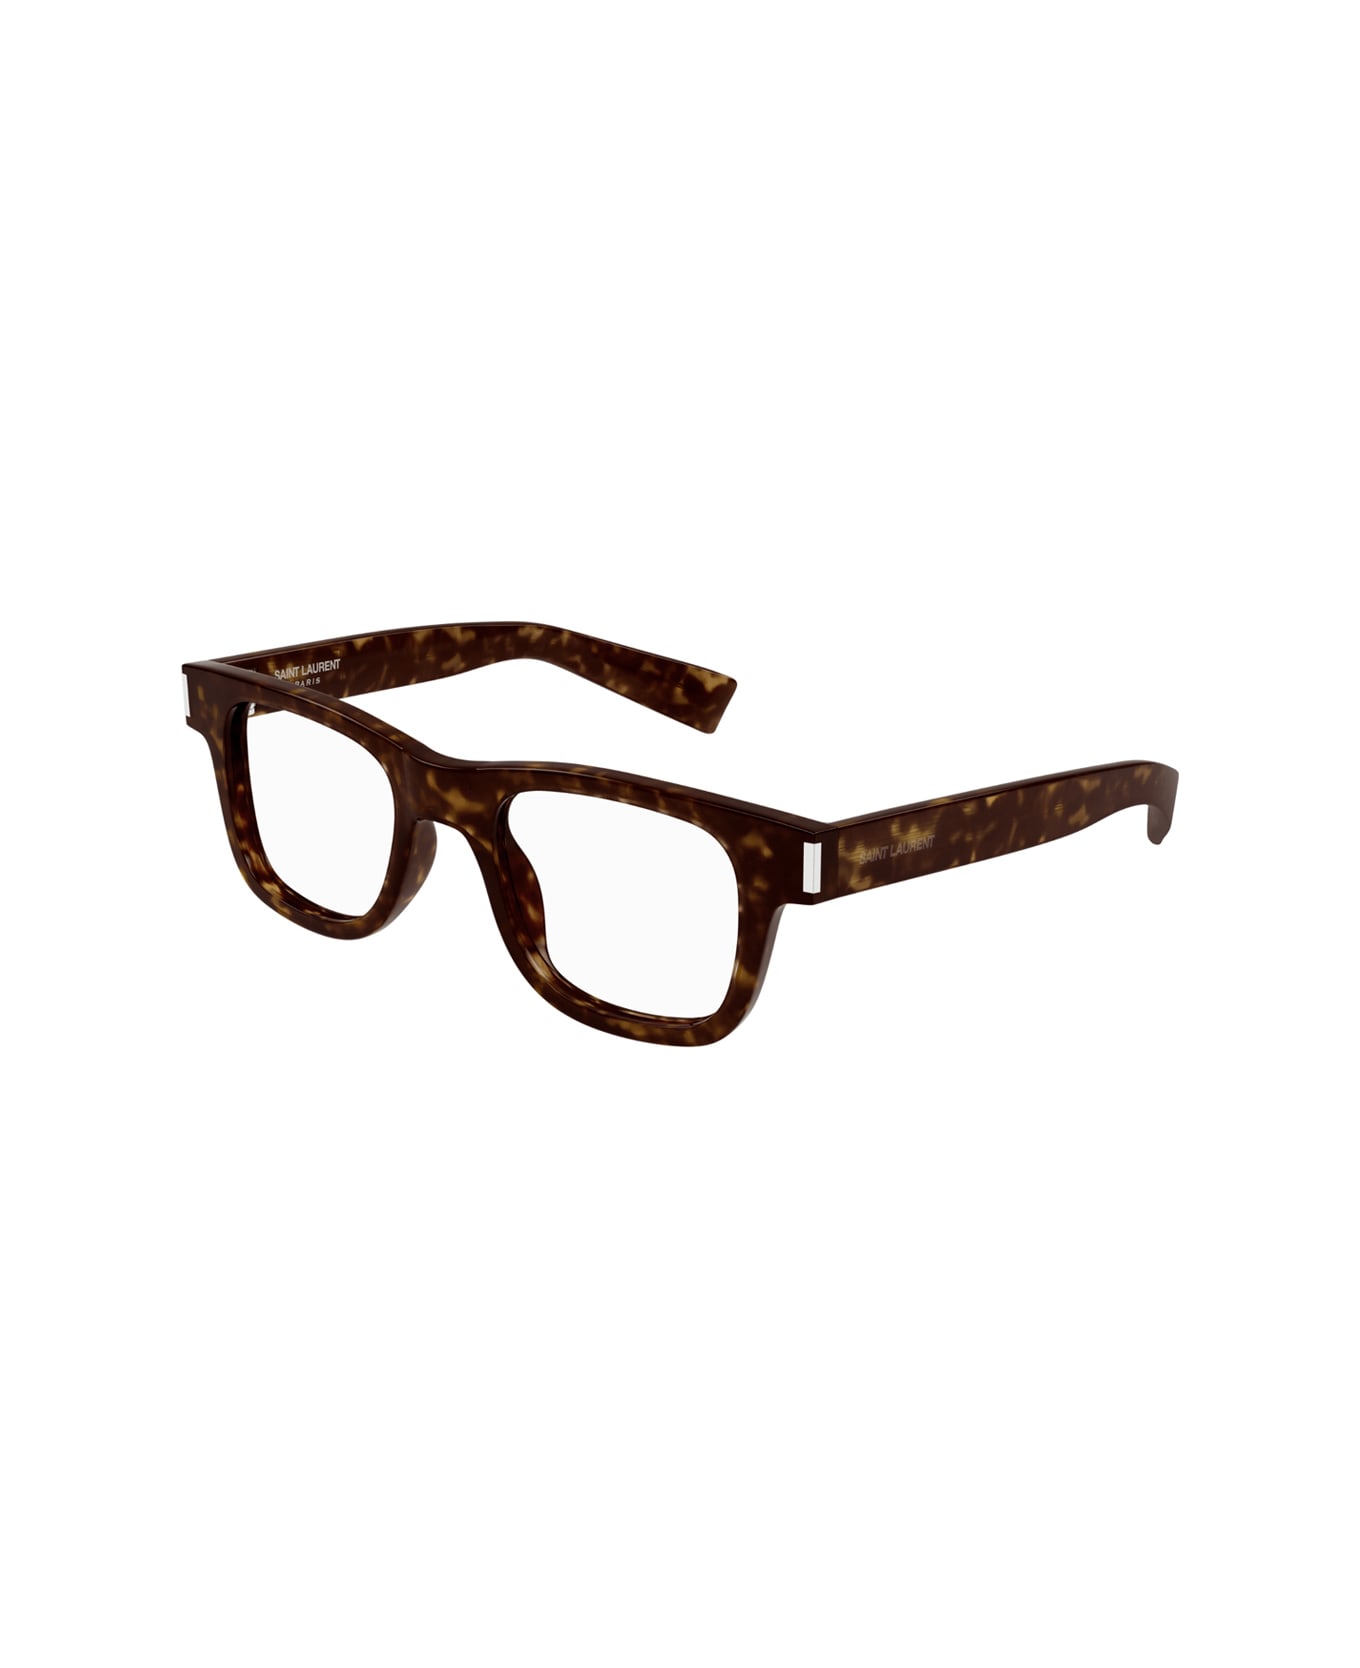 Saint Laurent Eyewear Sl 564 009 Glasses - Marrone アイウェア